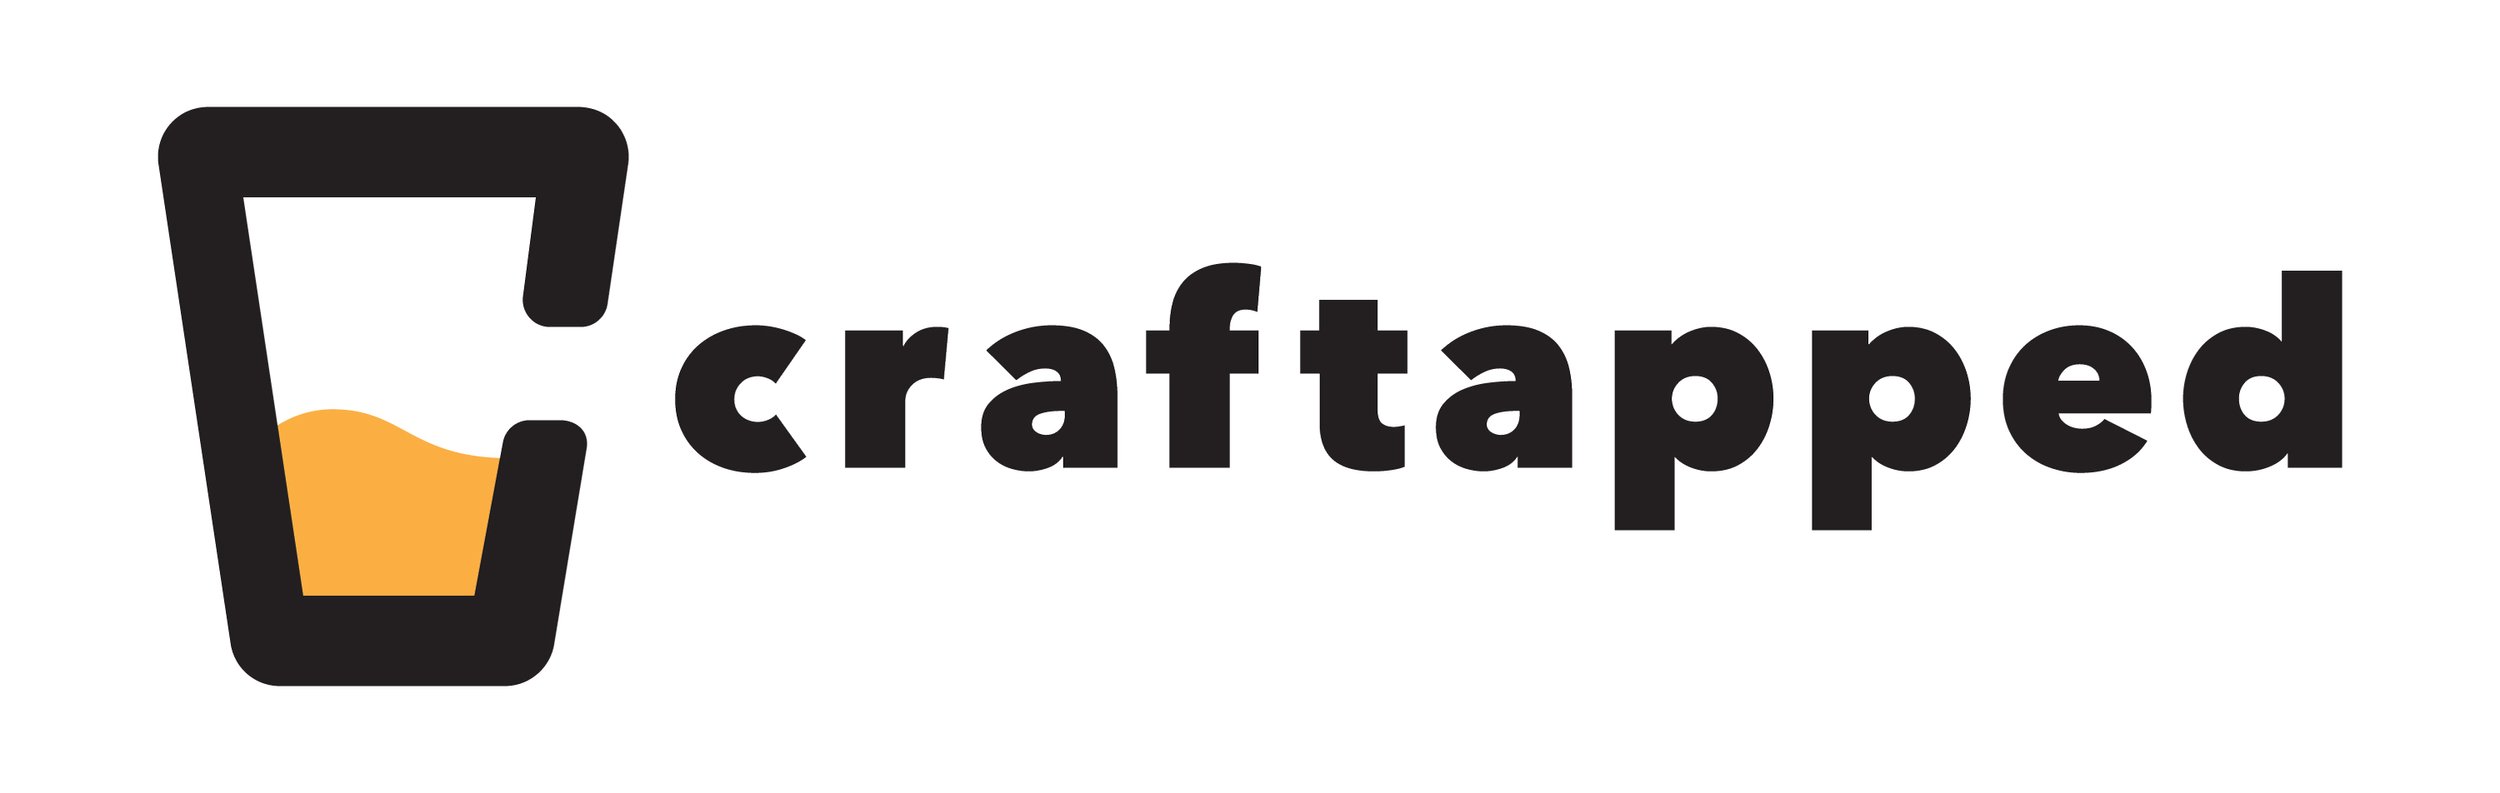 Craftapped_logo_final.jpg